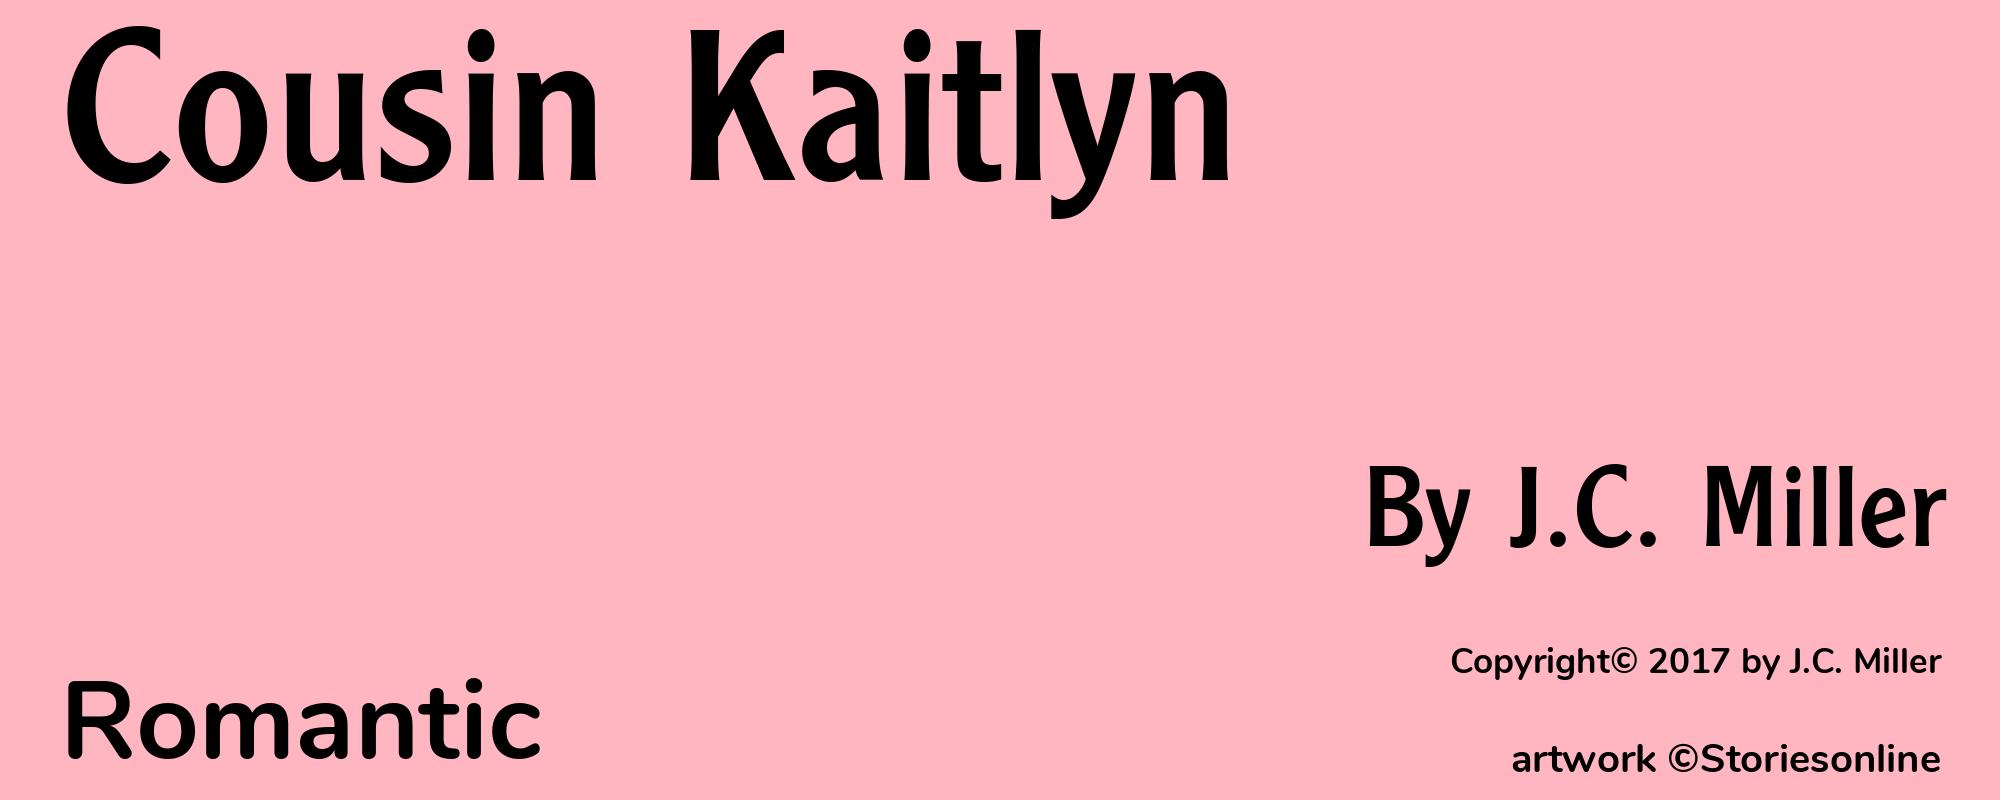 Cousin Kaitlyn - Cover